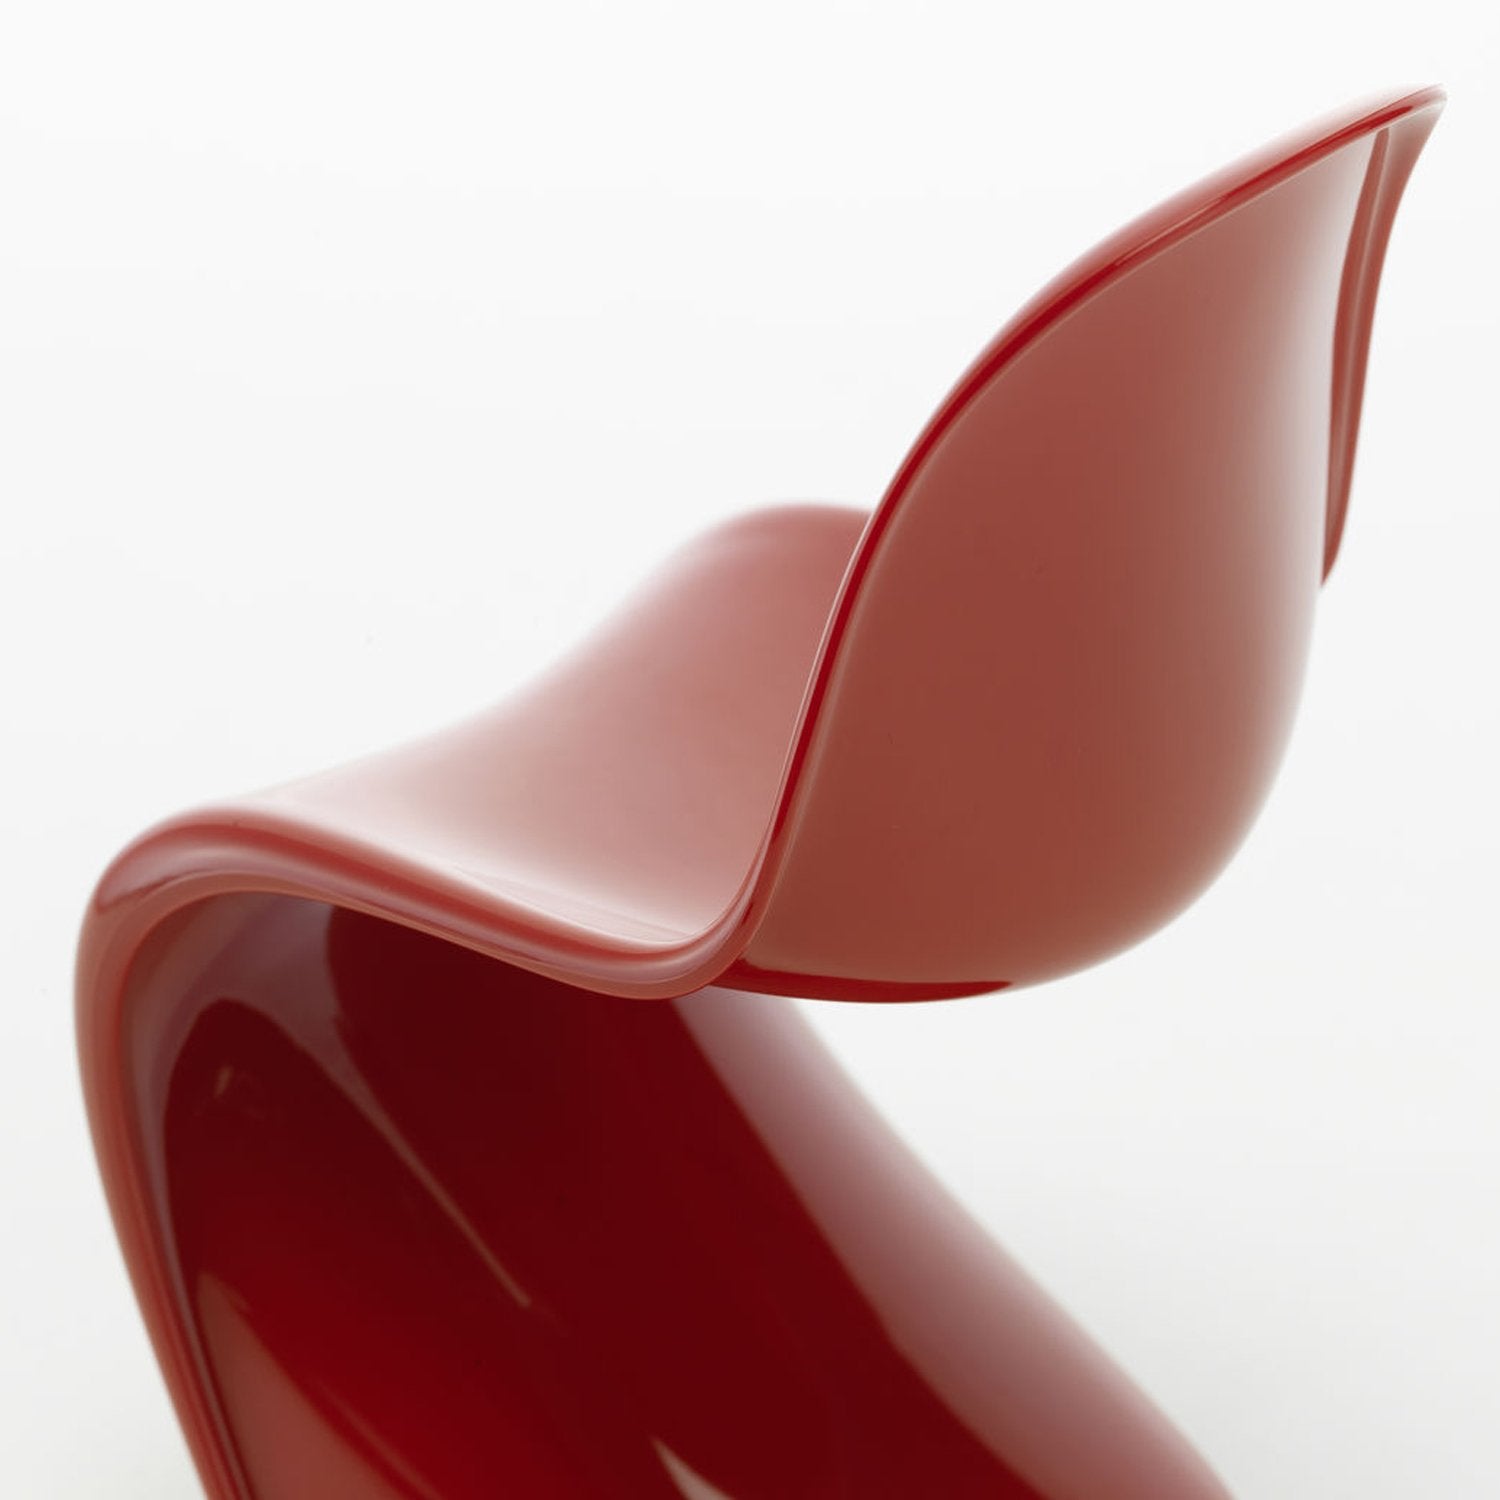 Miniatur Panton Chairs - Vitra Design Museum Shop